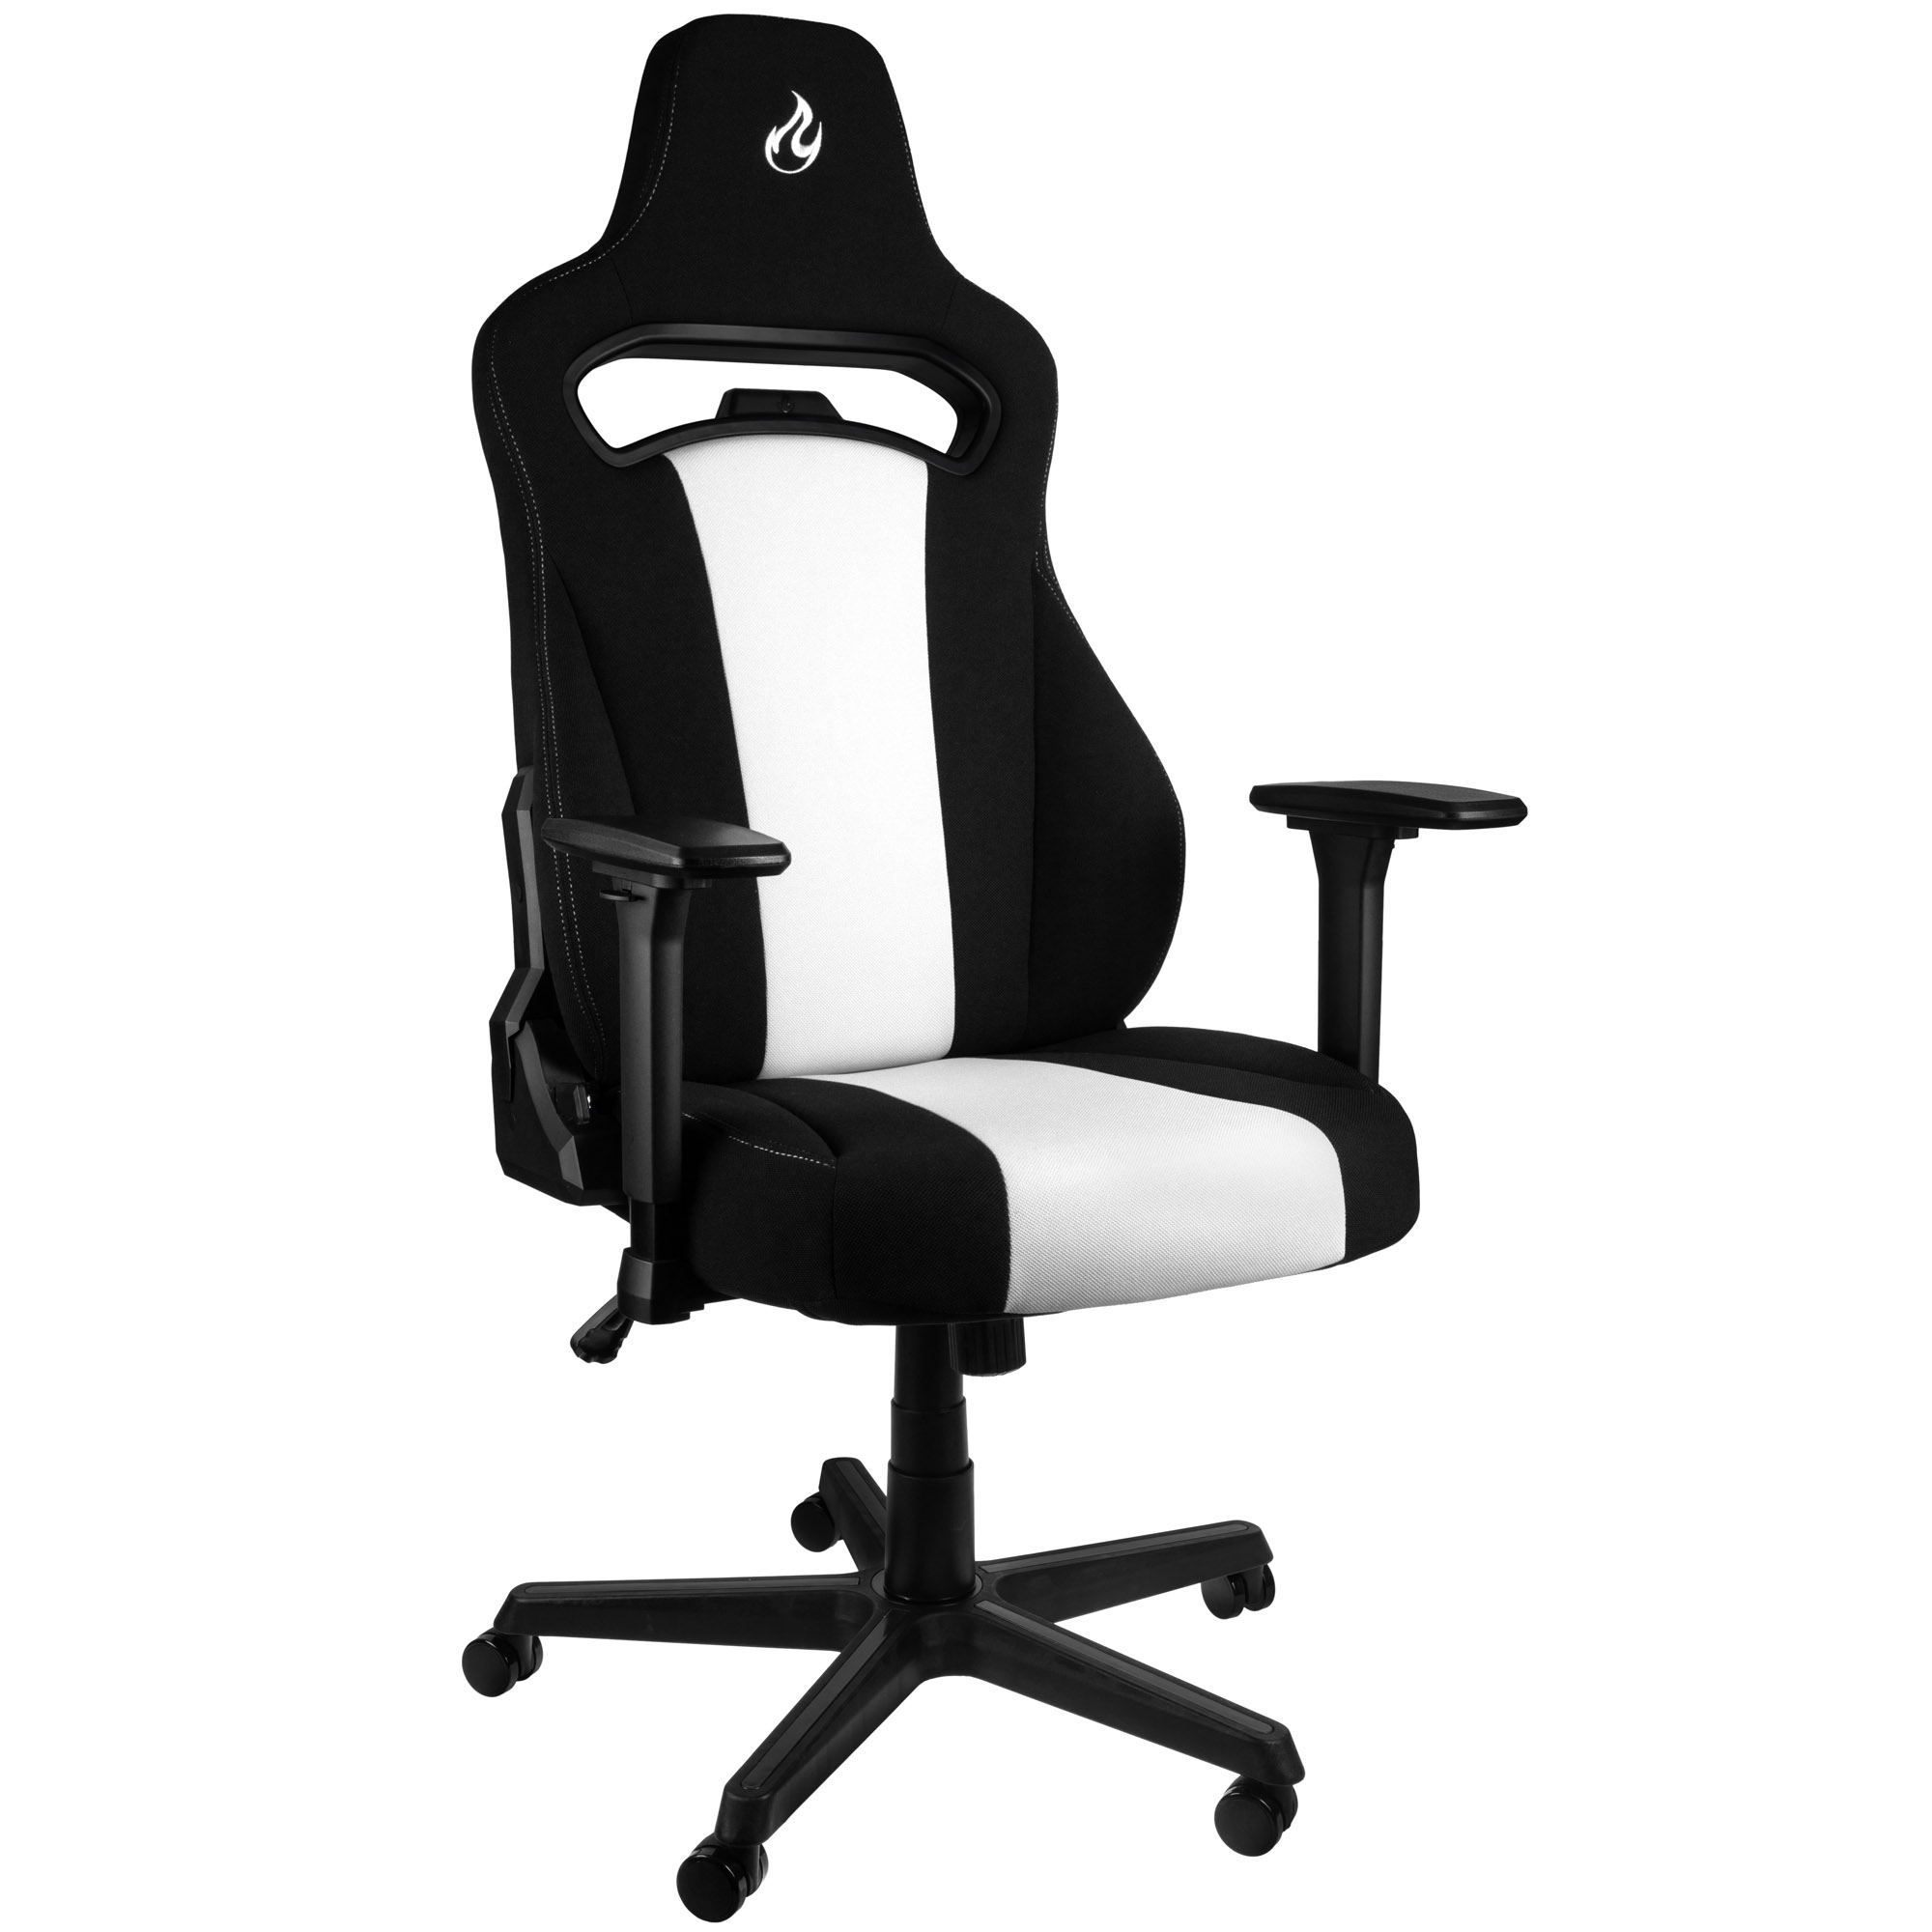  - E250 Gaming Chair Black/White